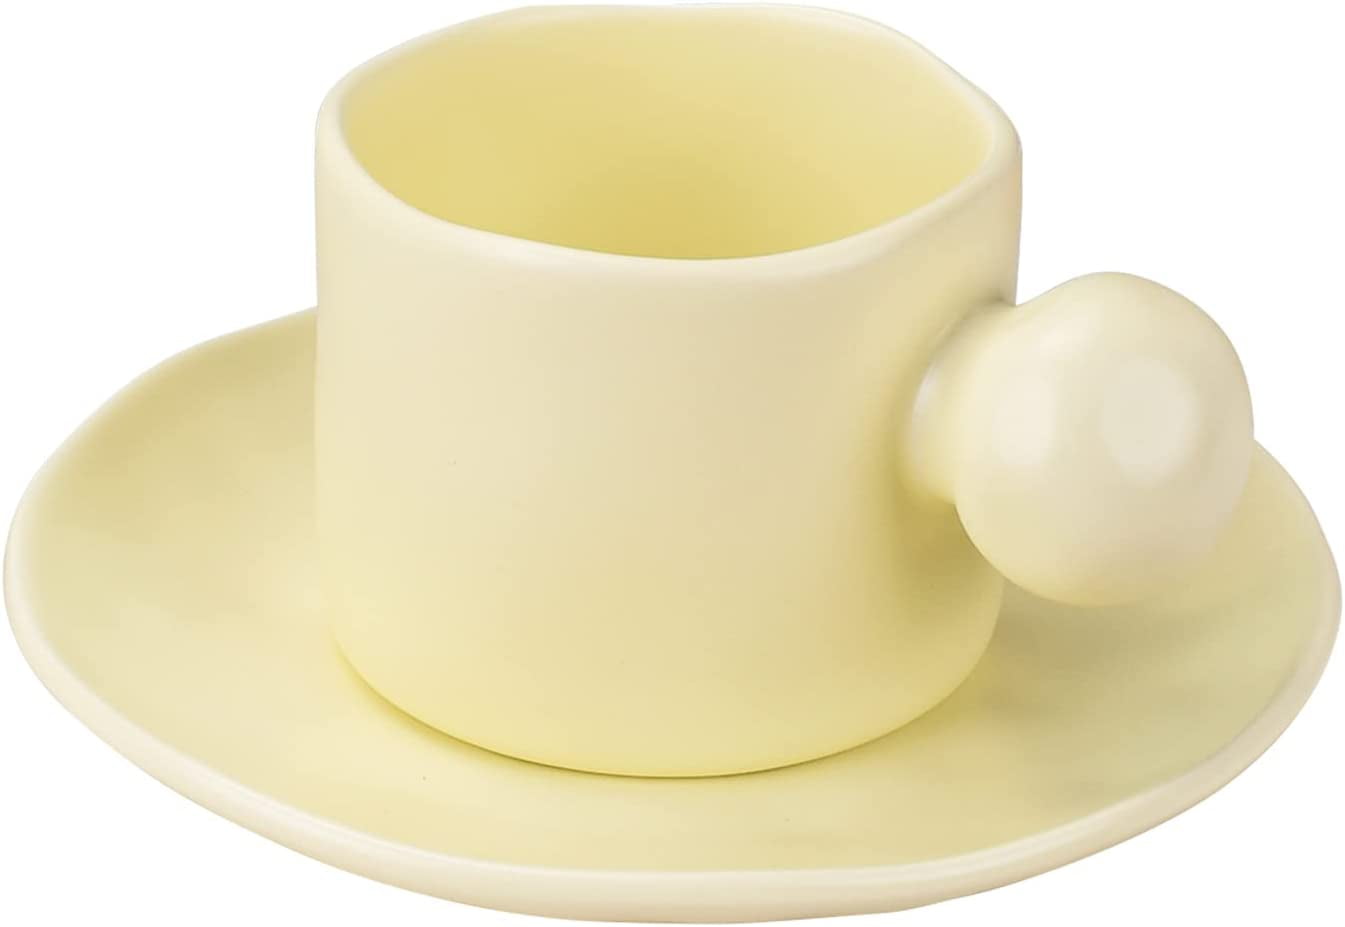 13.5 Oz Creative Cute Microlandschaft Ceramic Tea Cup Coffee Mug Travel Mug  Milk Cup with Lid (Green/Pink/Beige/Yellow)